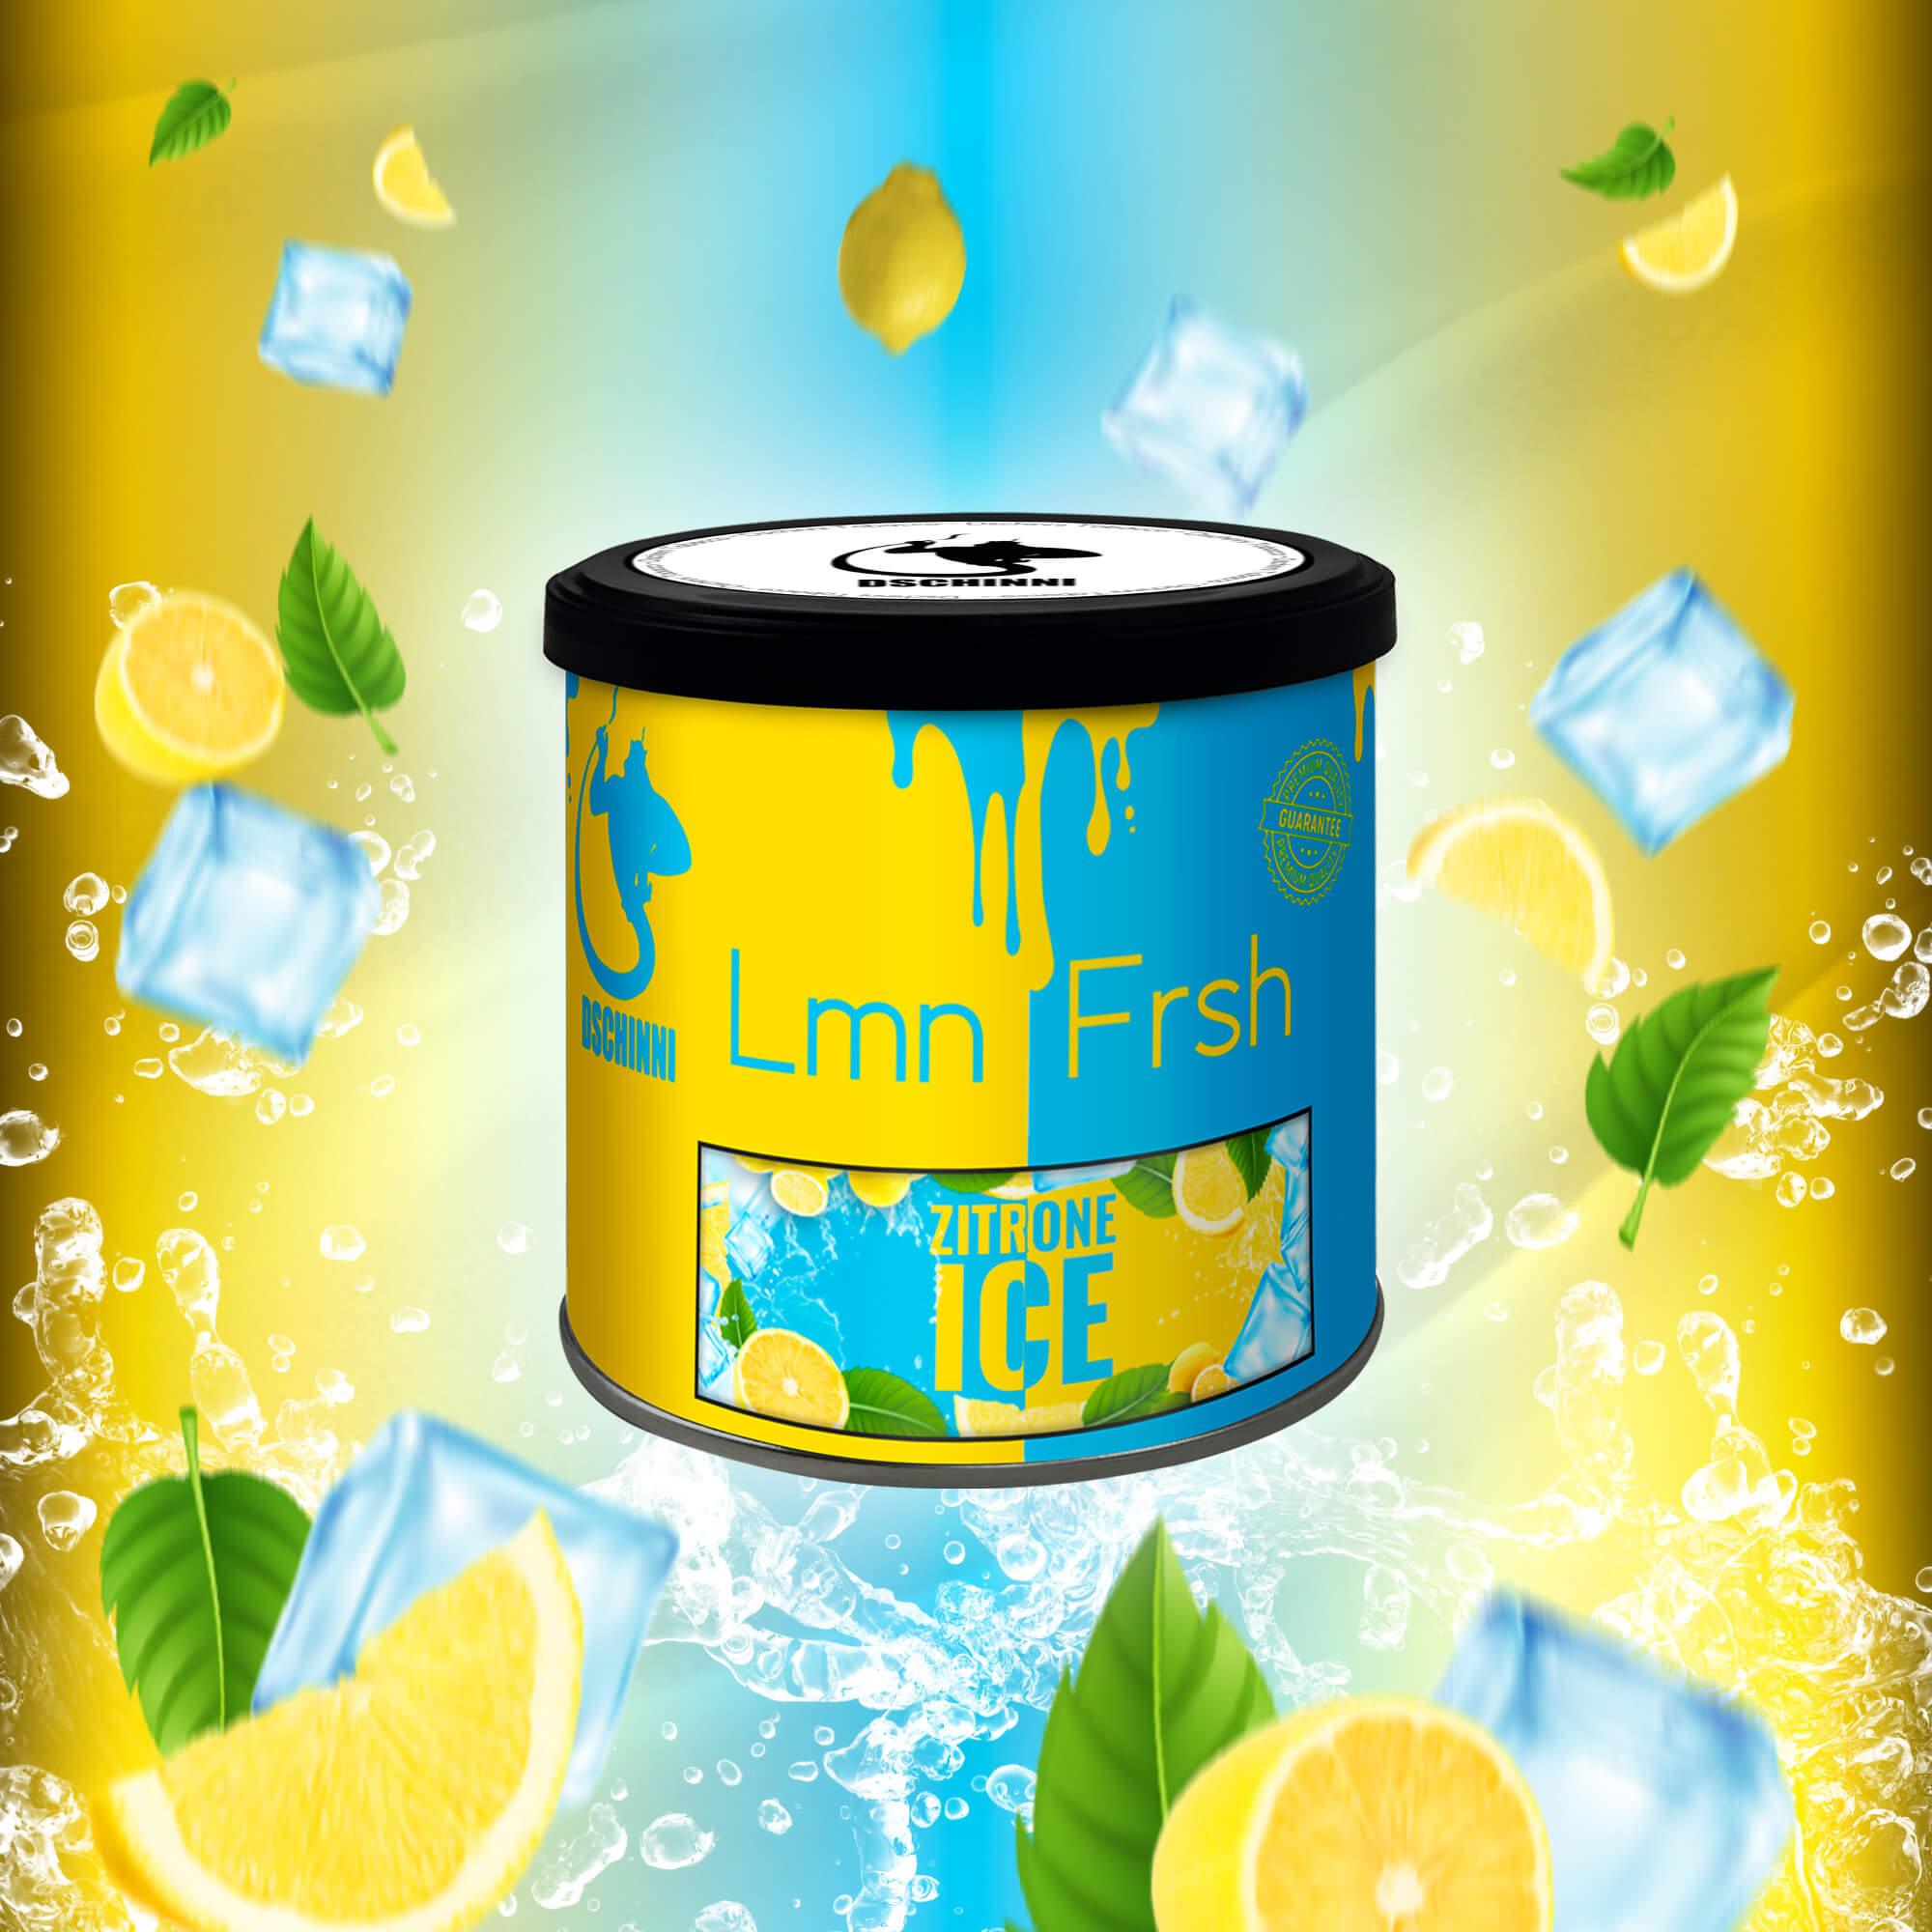 Dschinni Pfeifentabak Lemon Fresh Zitrone und Eis